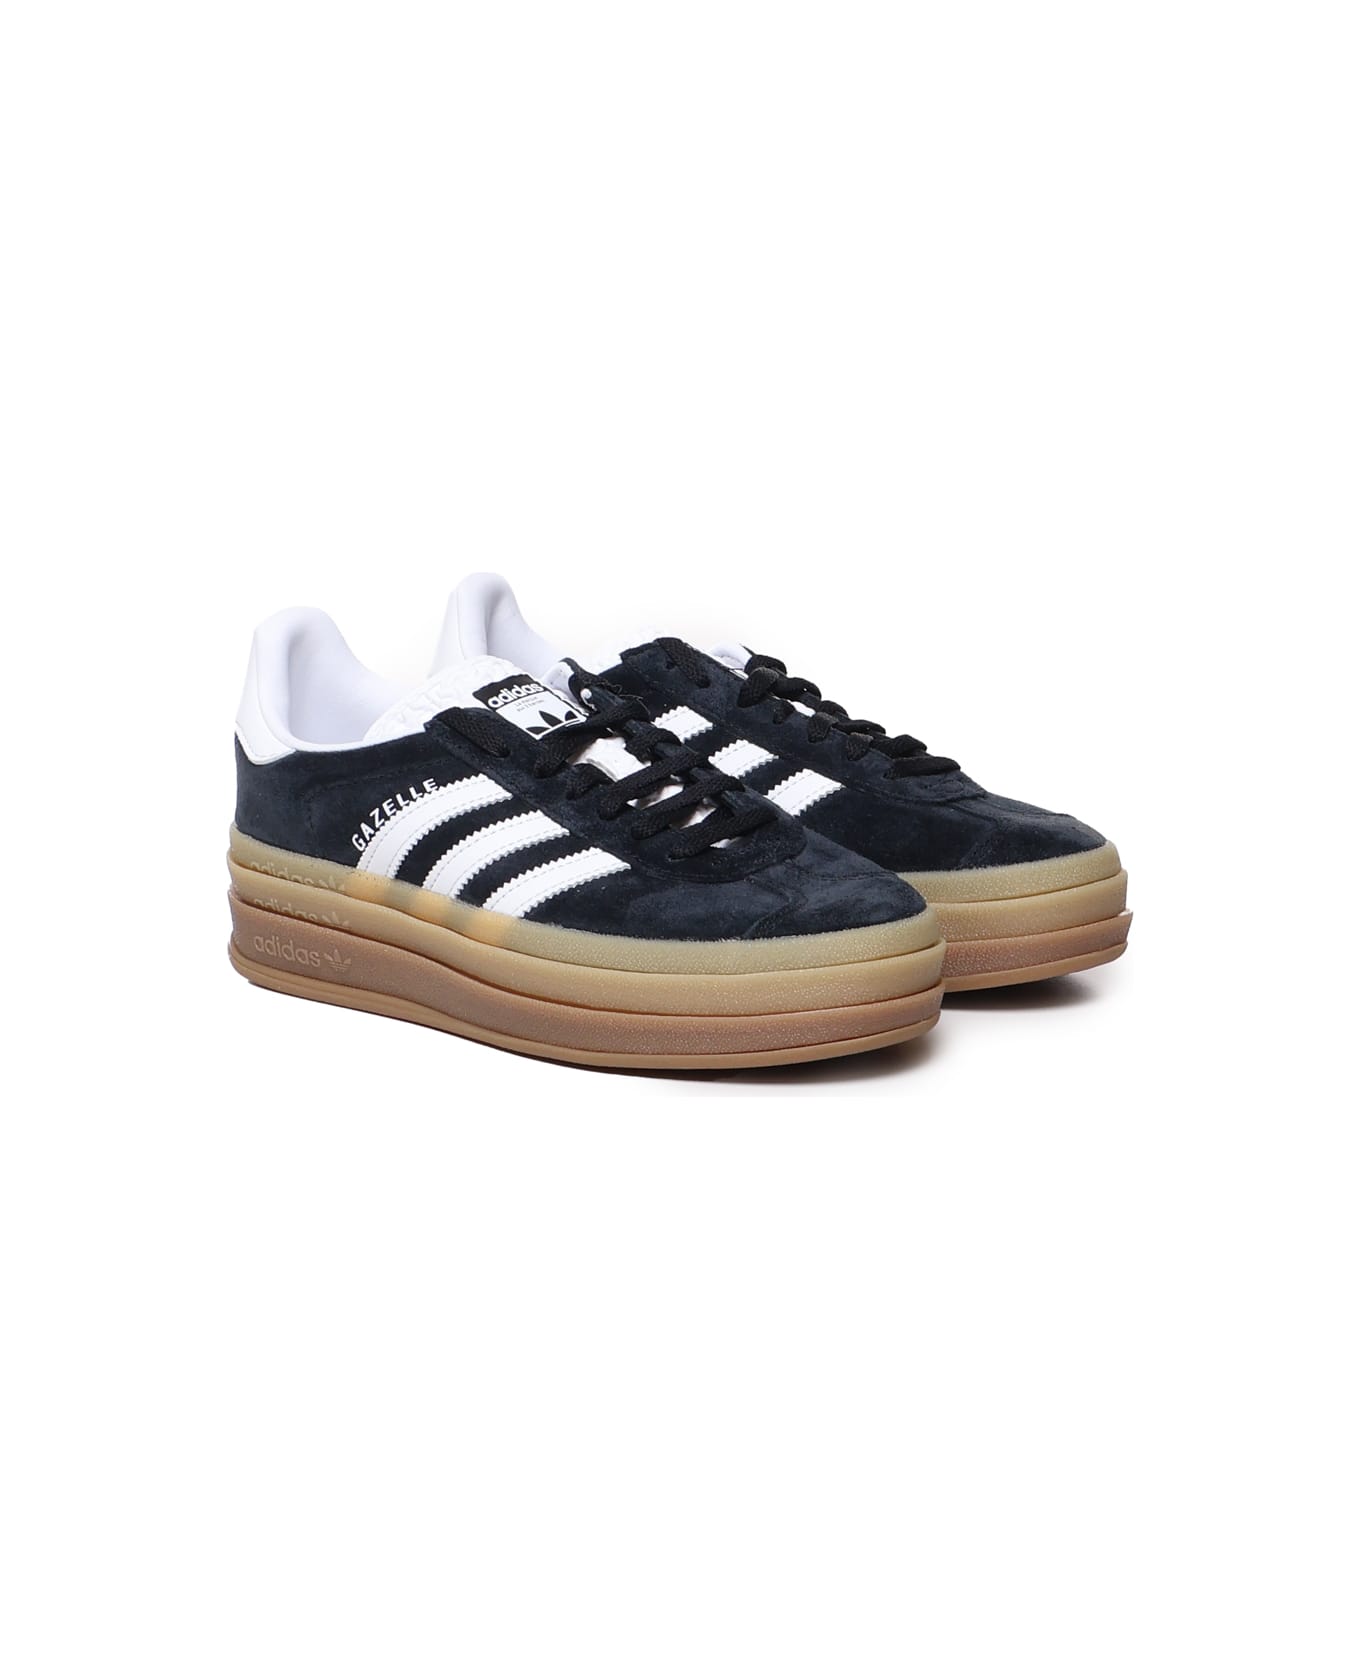 Adidas Originals Gazelle Bold Sneakers - Cblack/ftwwht/ftwwht